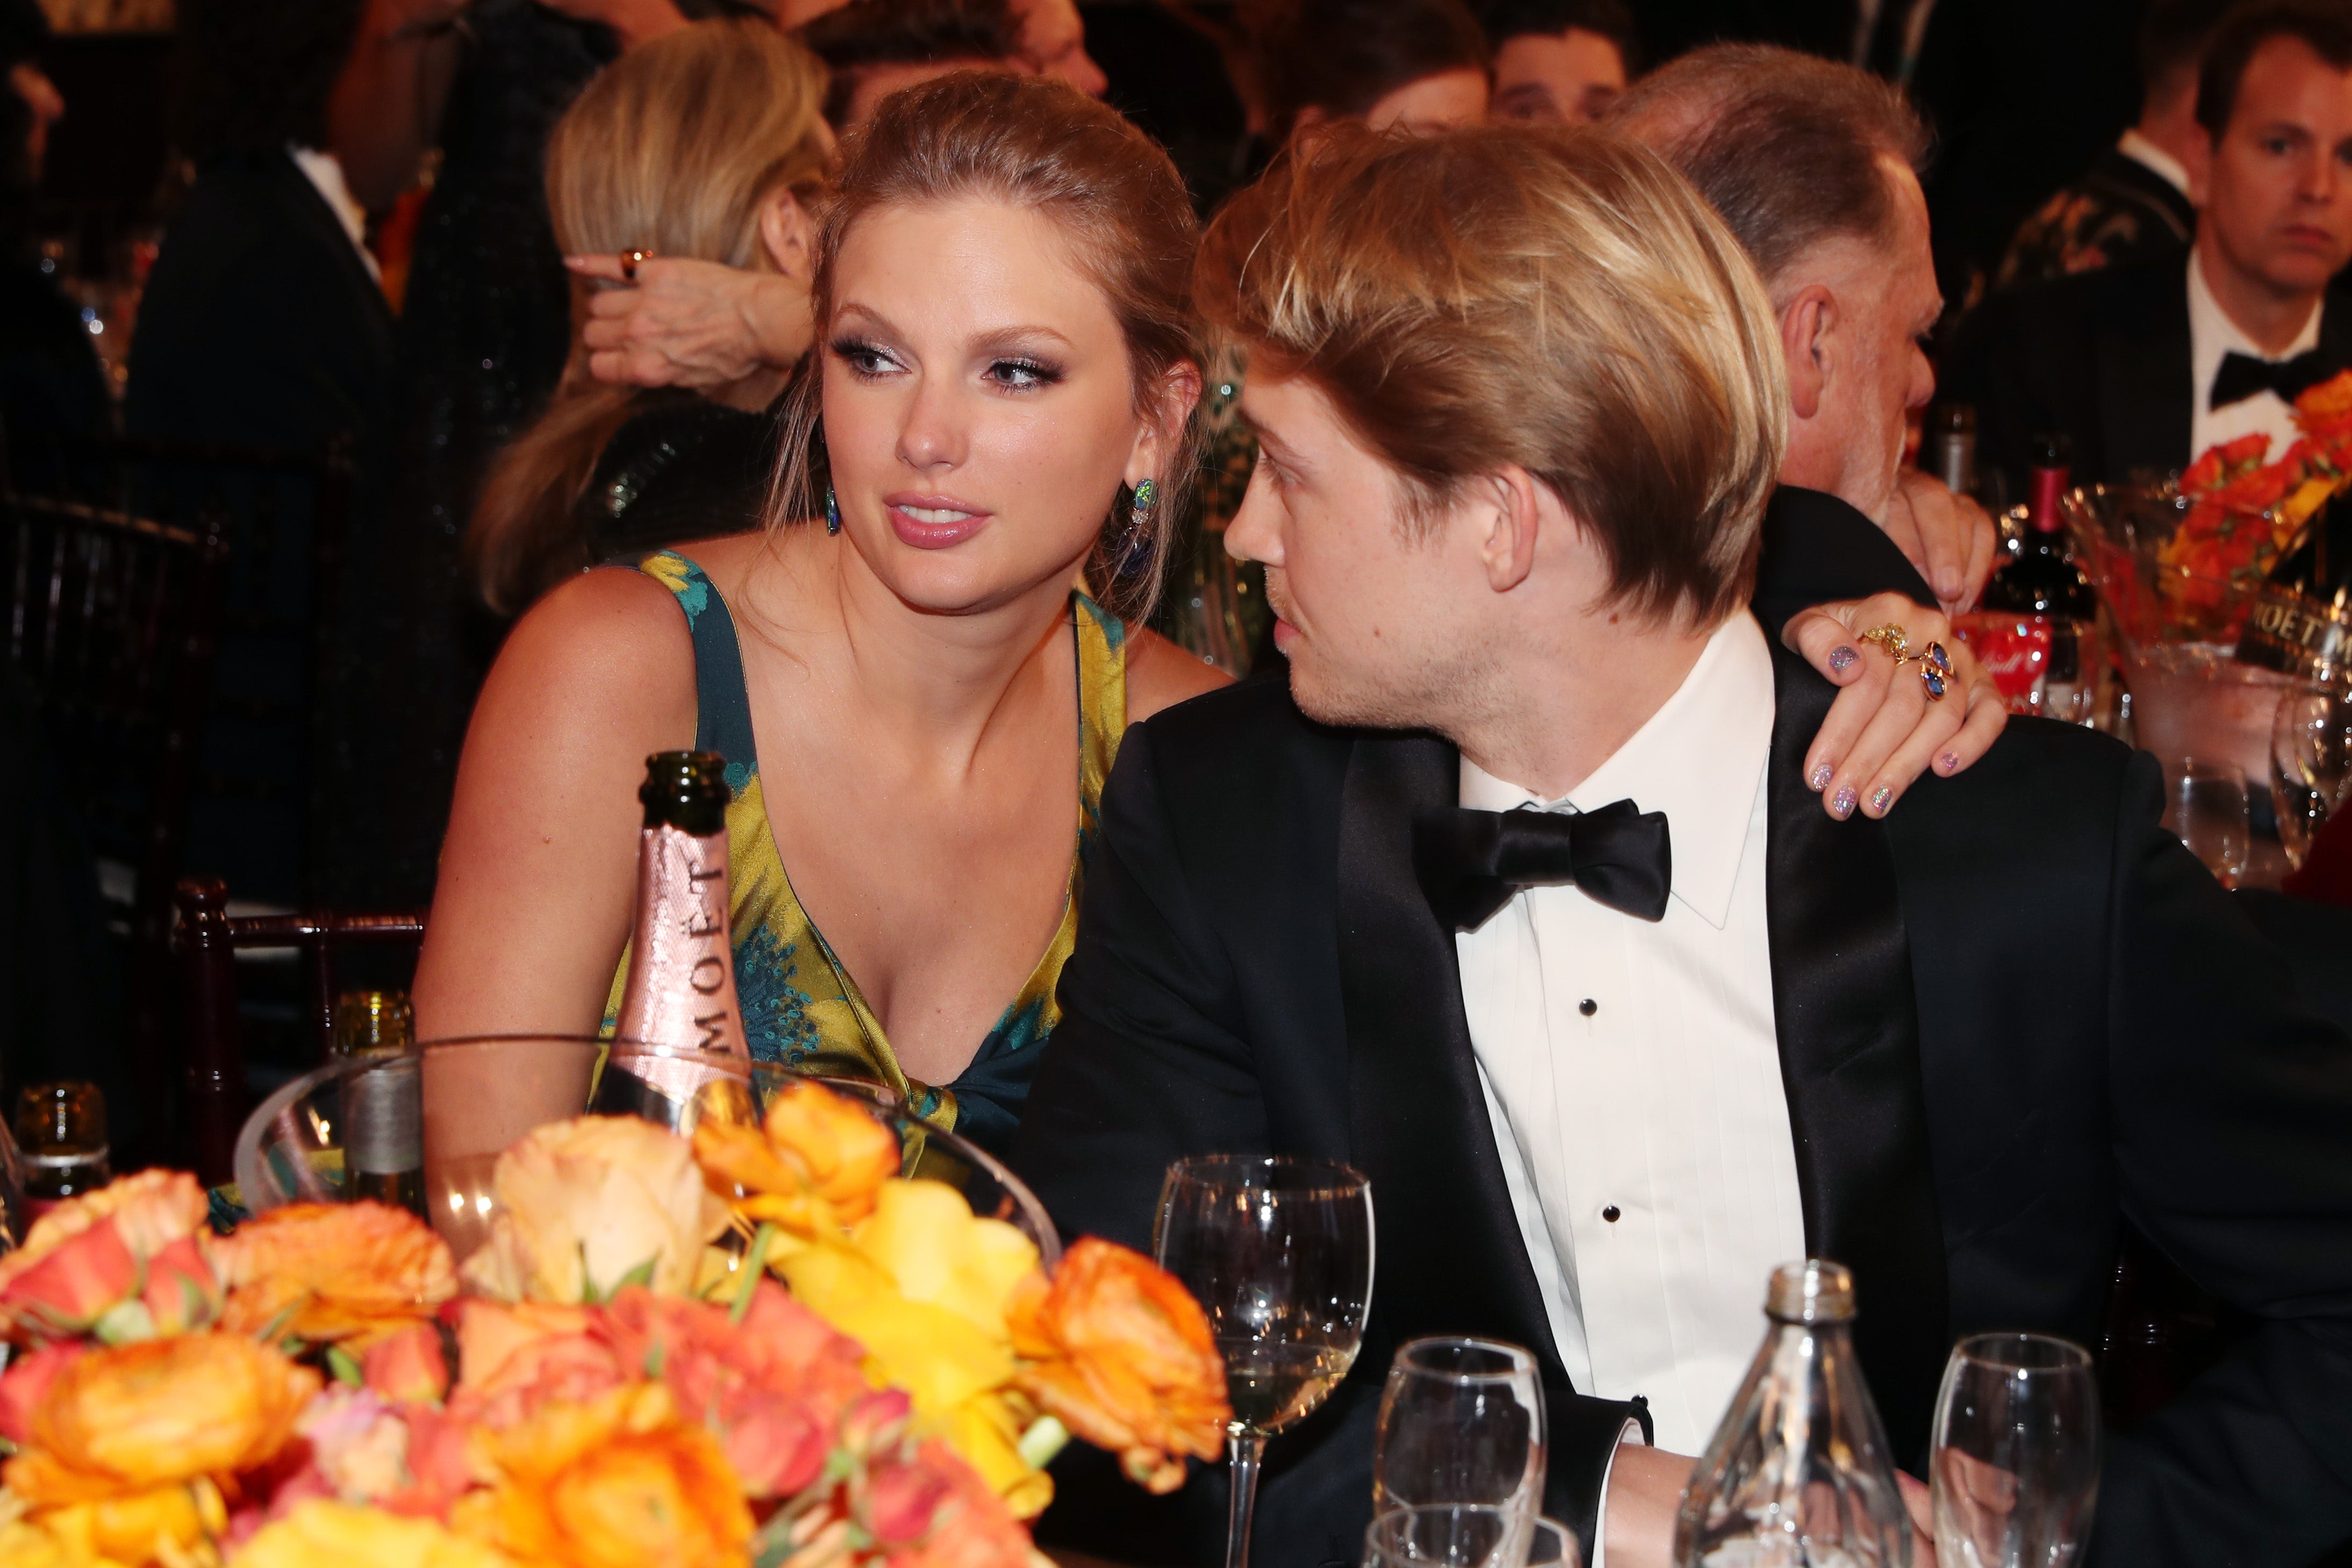 Taylor Swift And Joe Alwyn Have Their Most Public Date Night